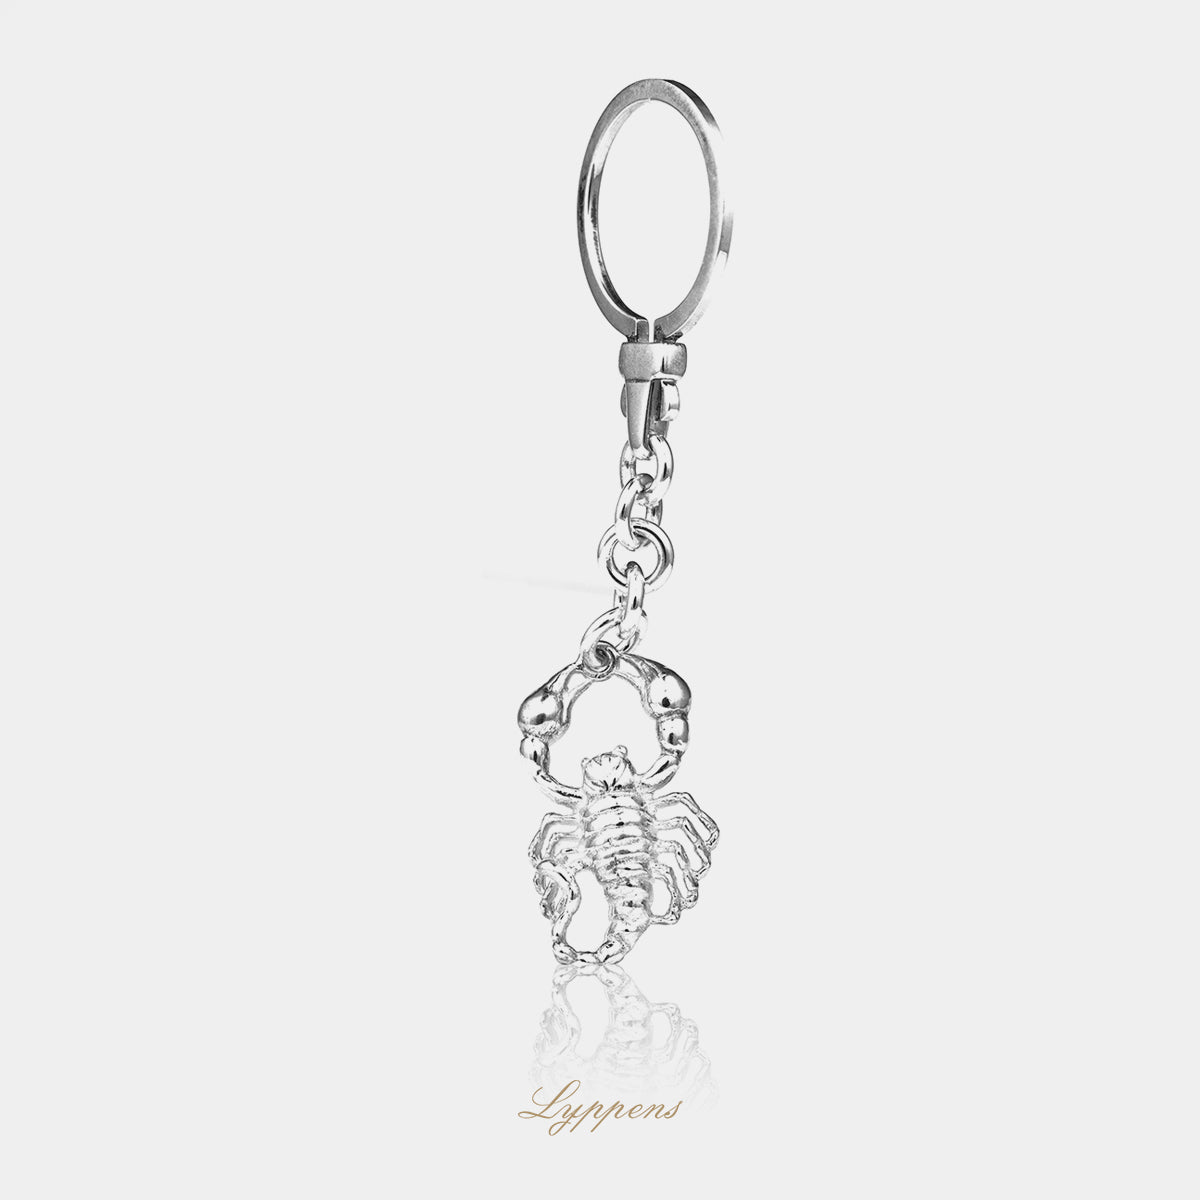 Silver "Scorpio" constellation key chain